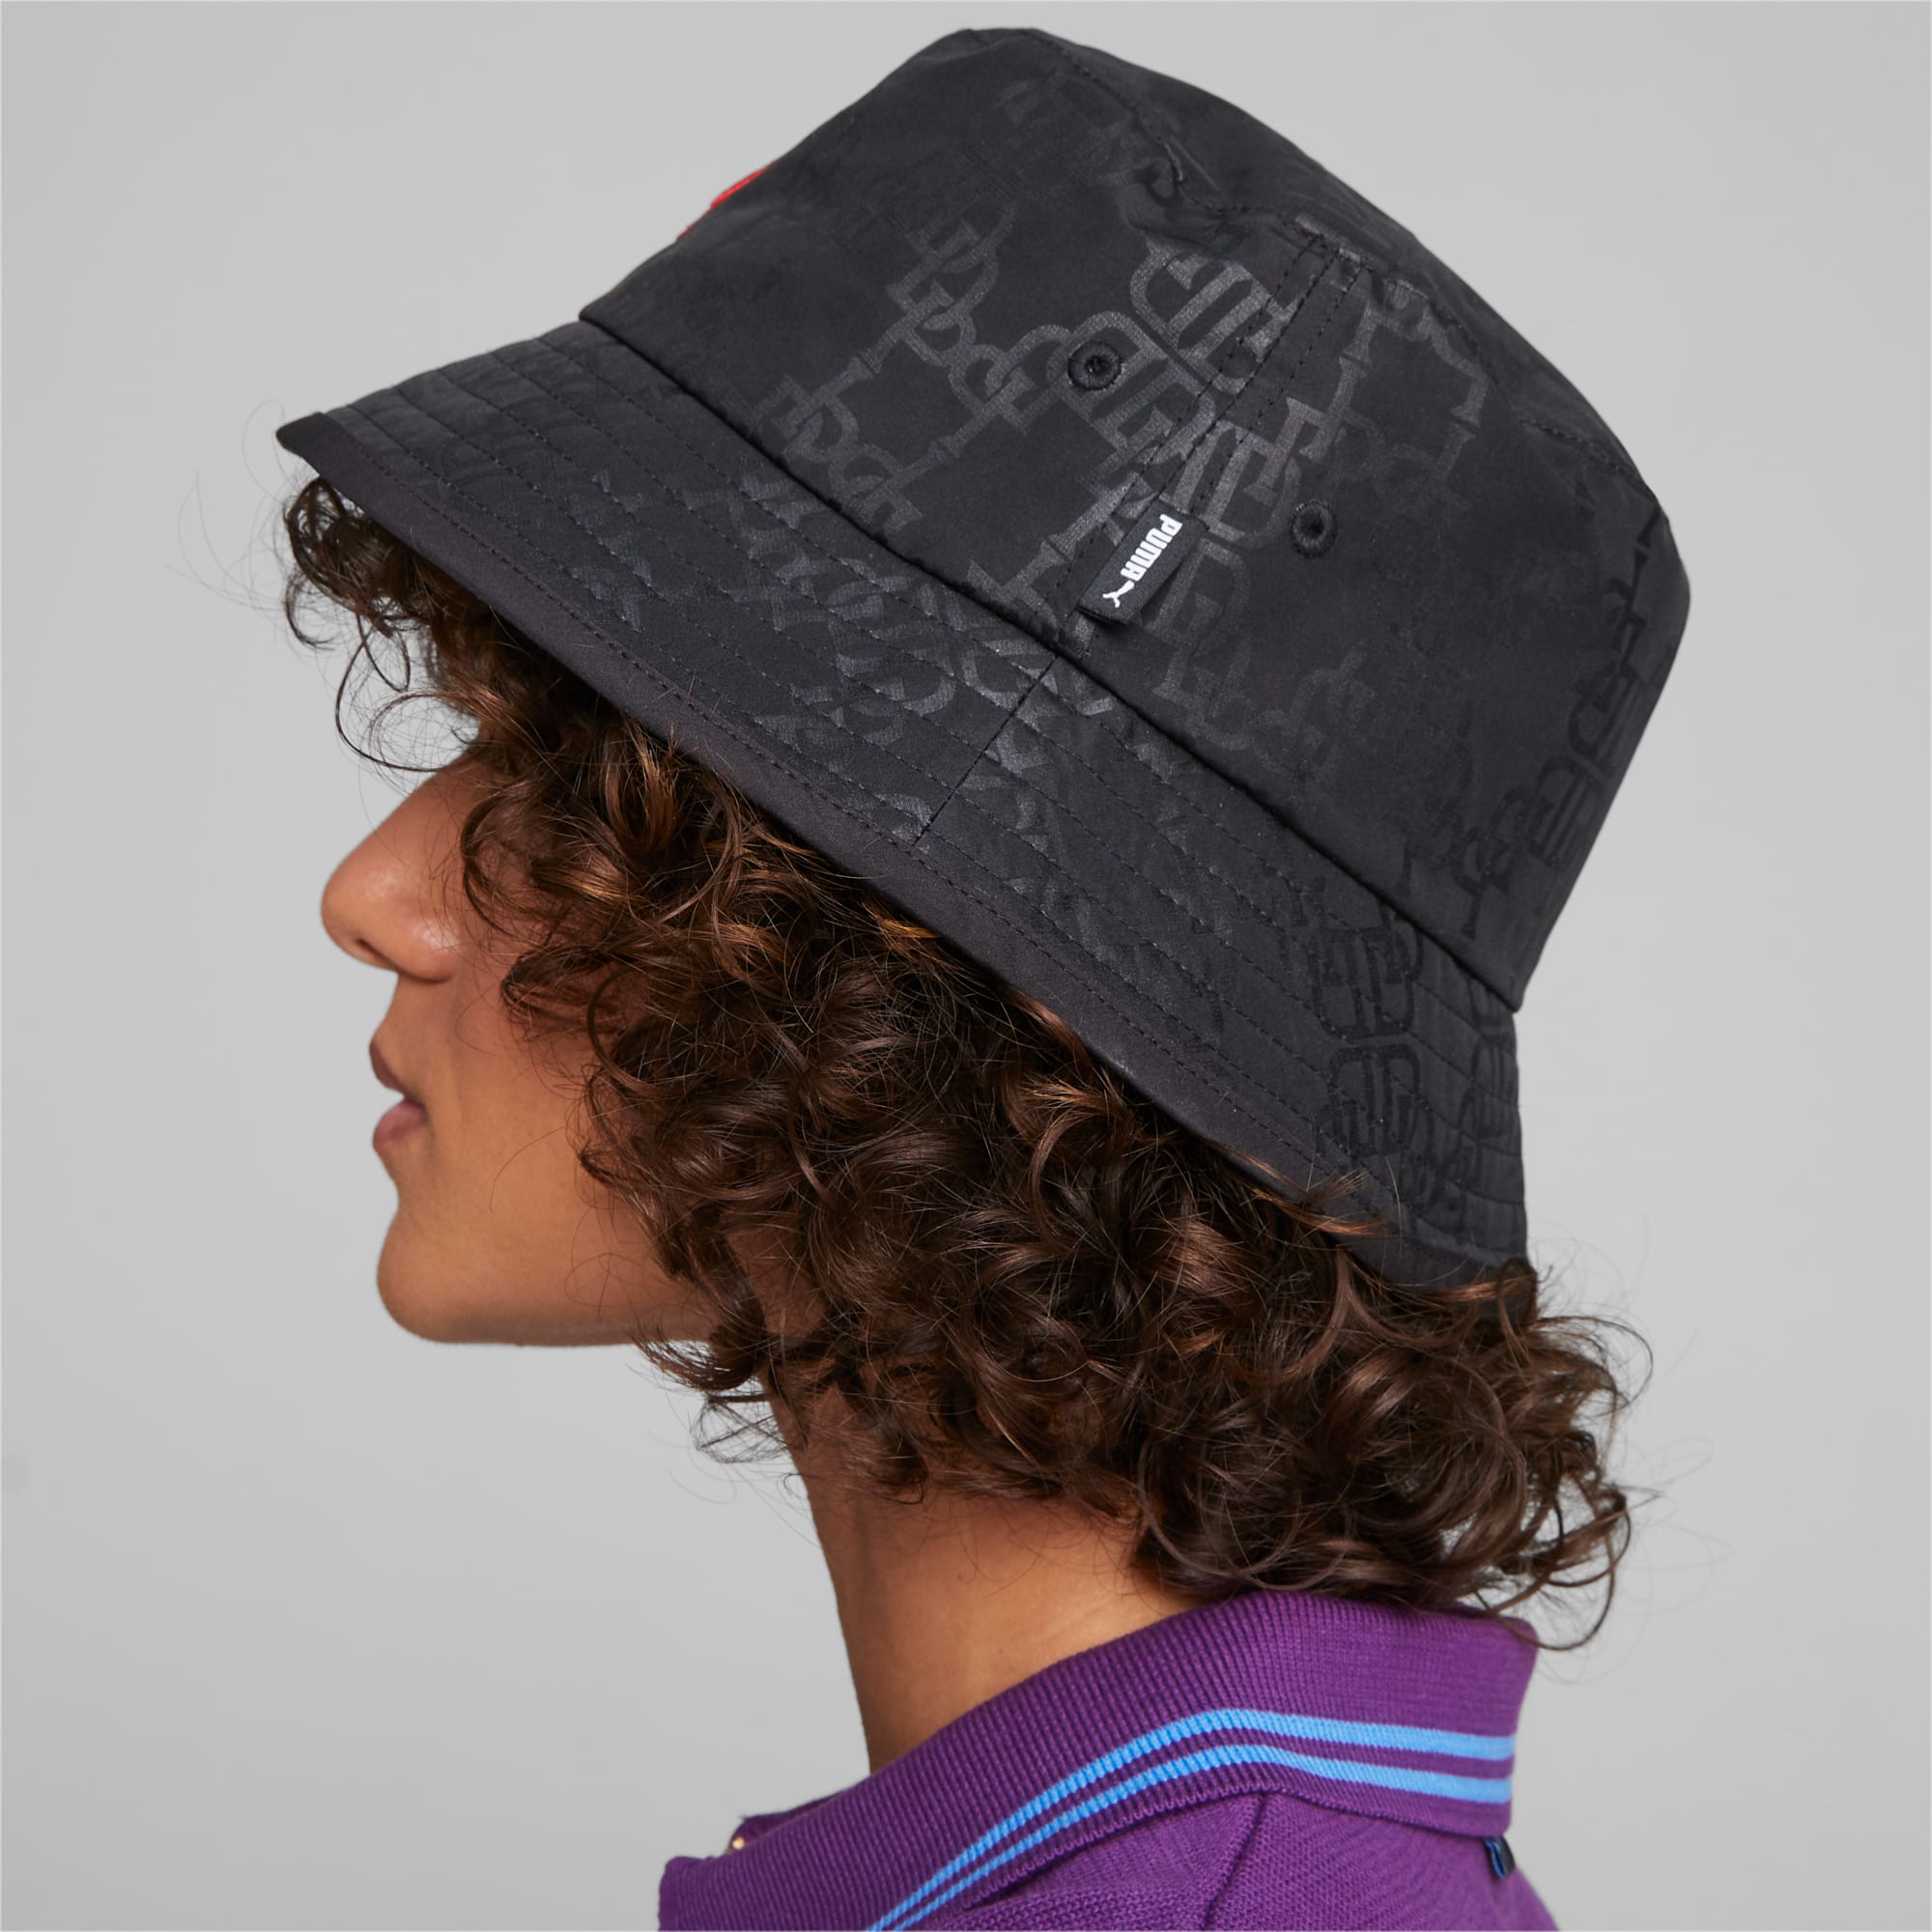 PUMA X DAPPER DAN Bucket Hat, Schwarz, Größe: L/XL, Accessoires